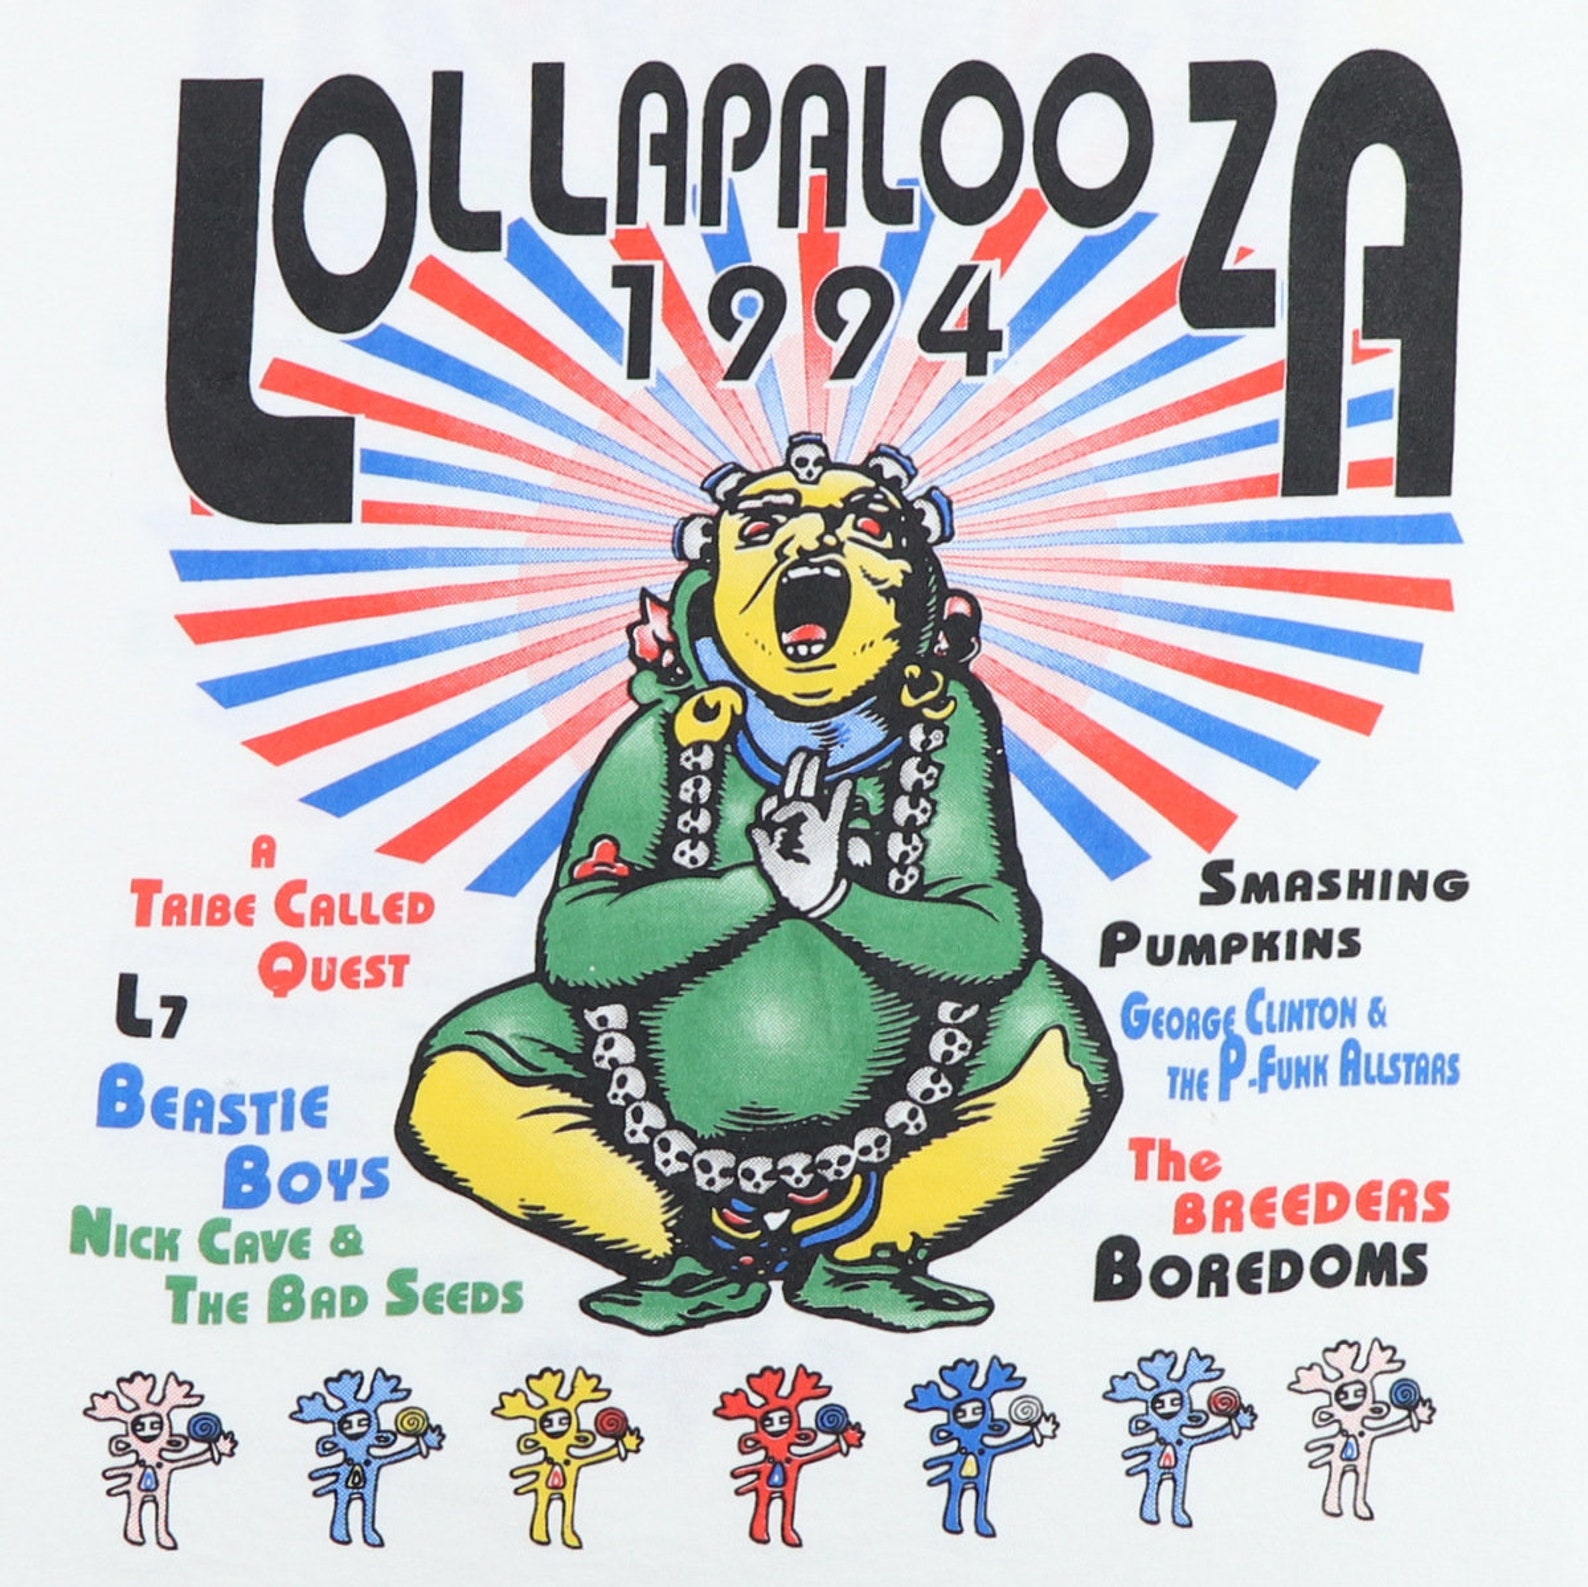 lollapalooza 94 tour dates